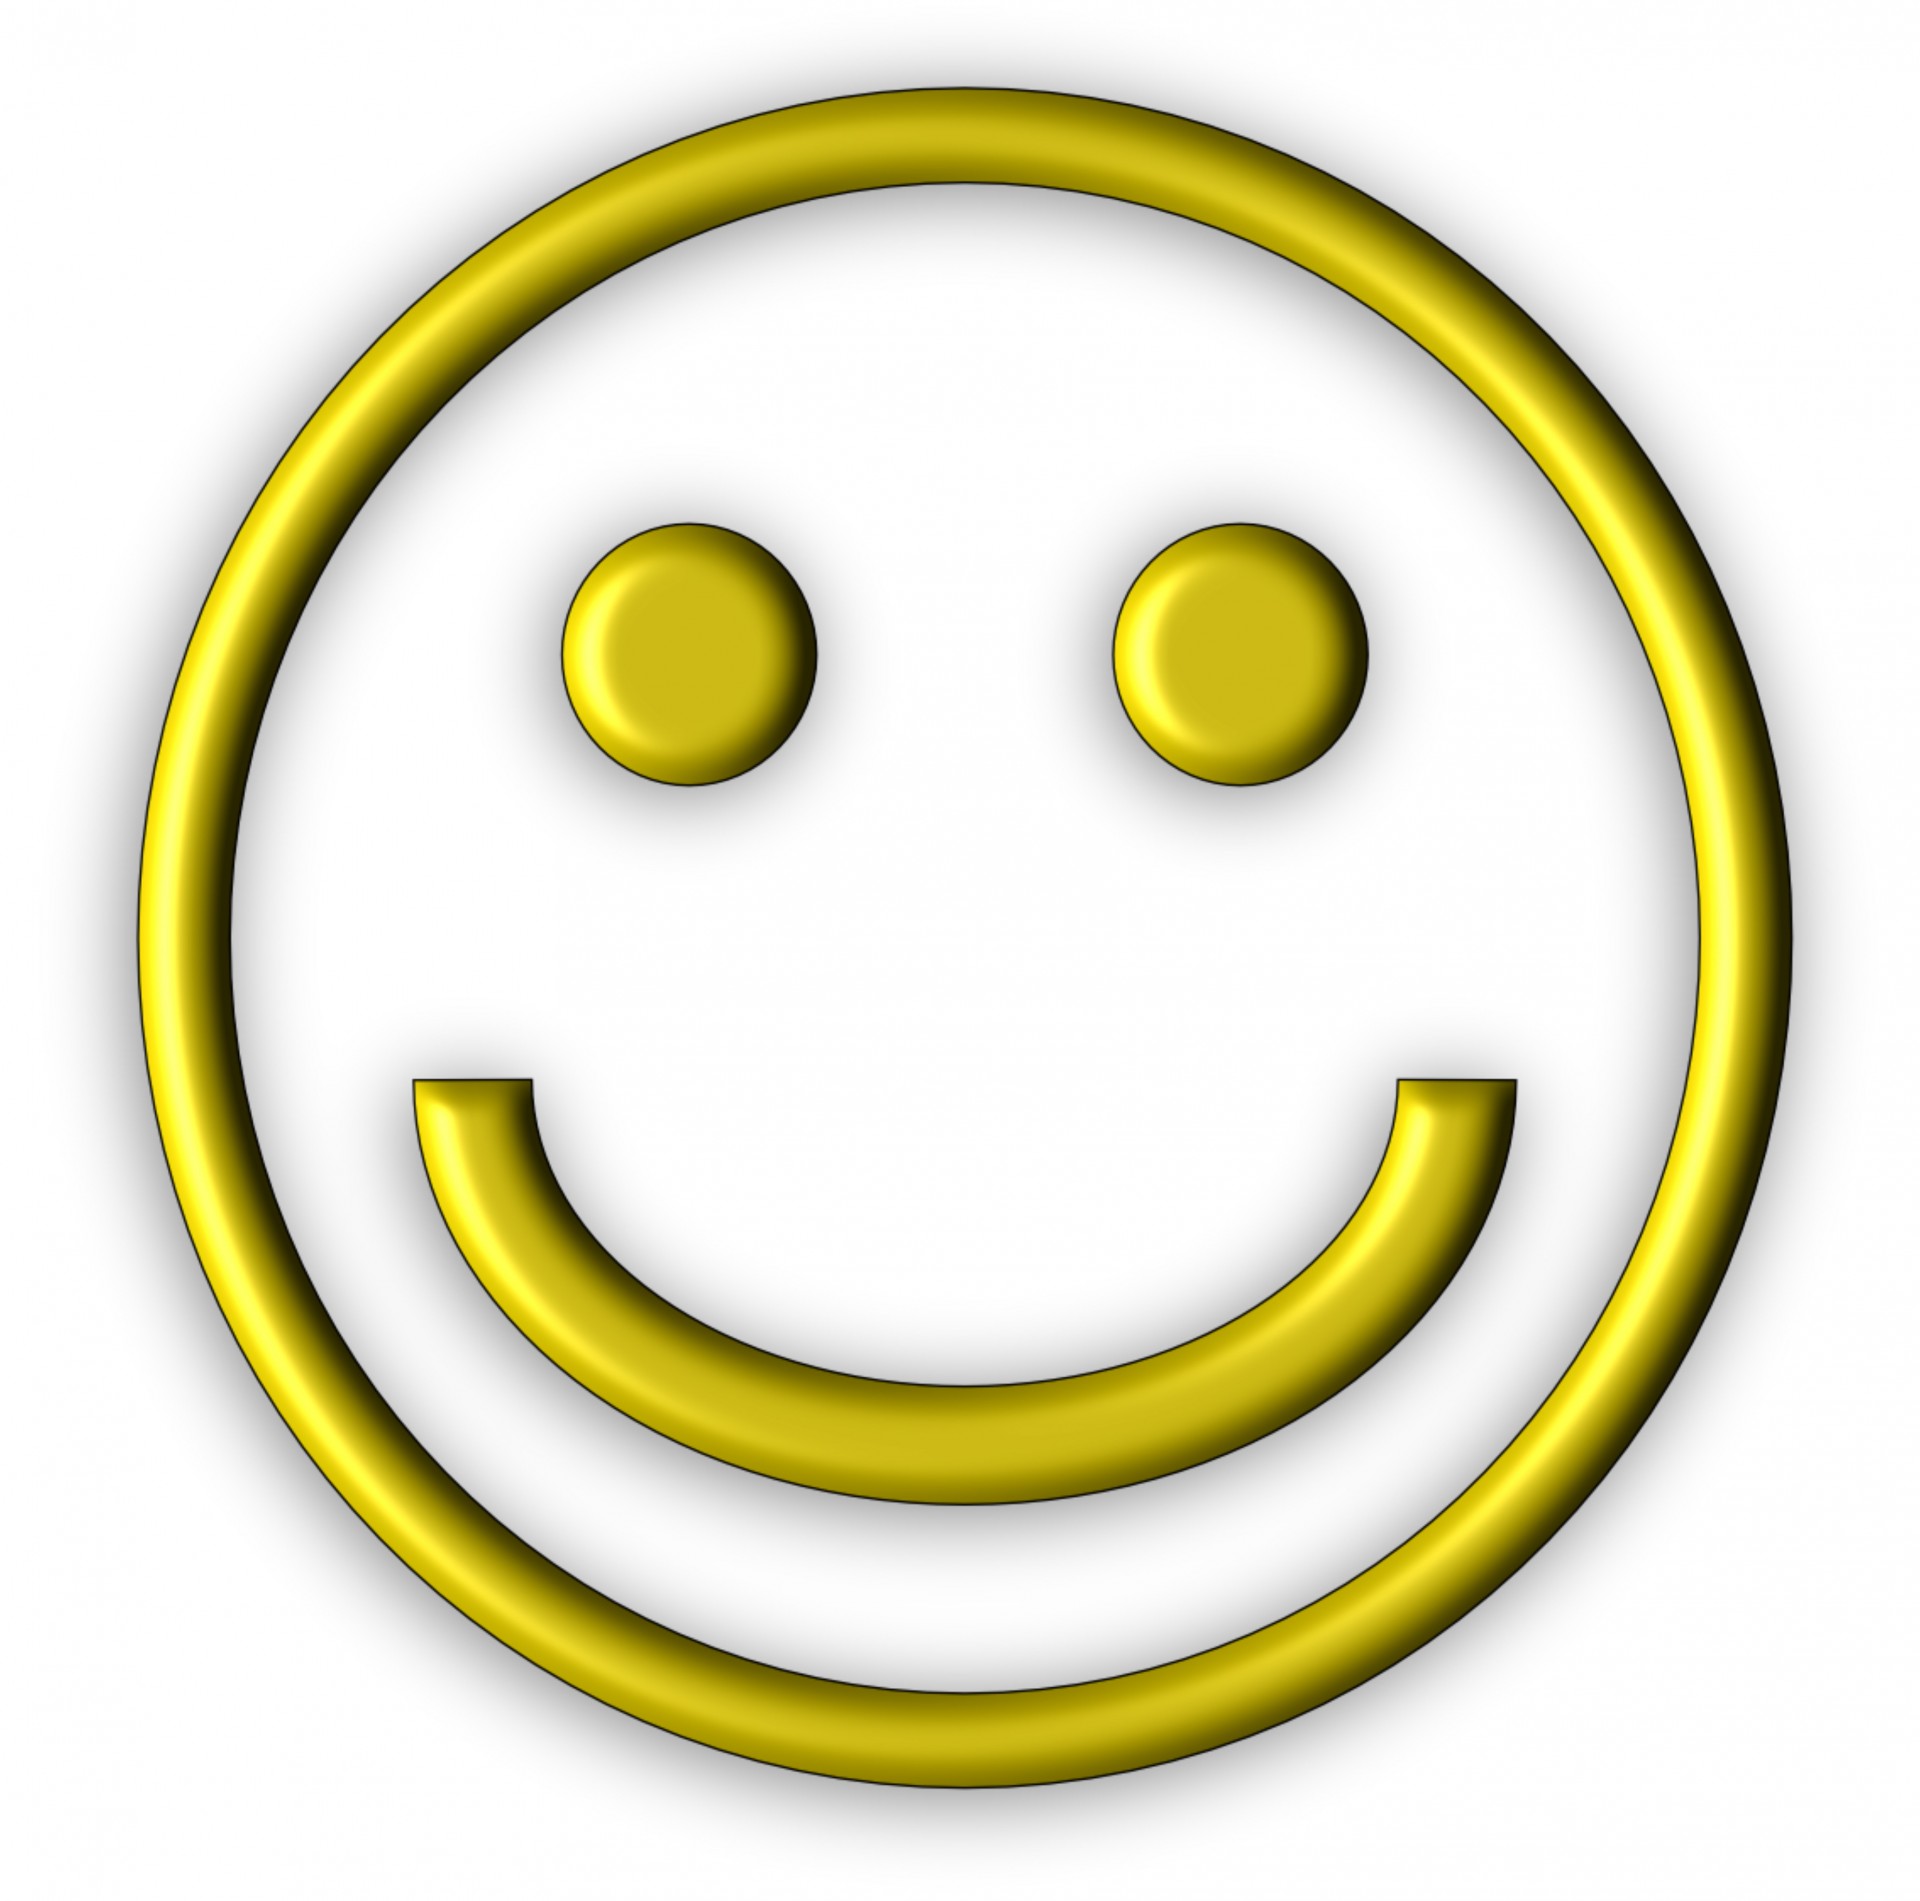 Smiley Face Images - Public Domain Pictures - Page 1